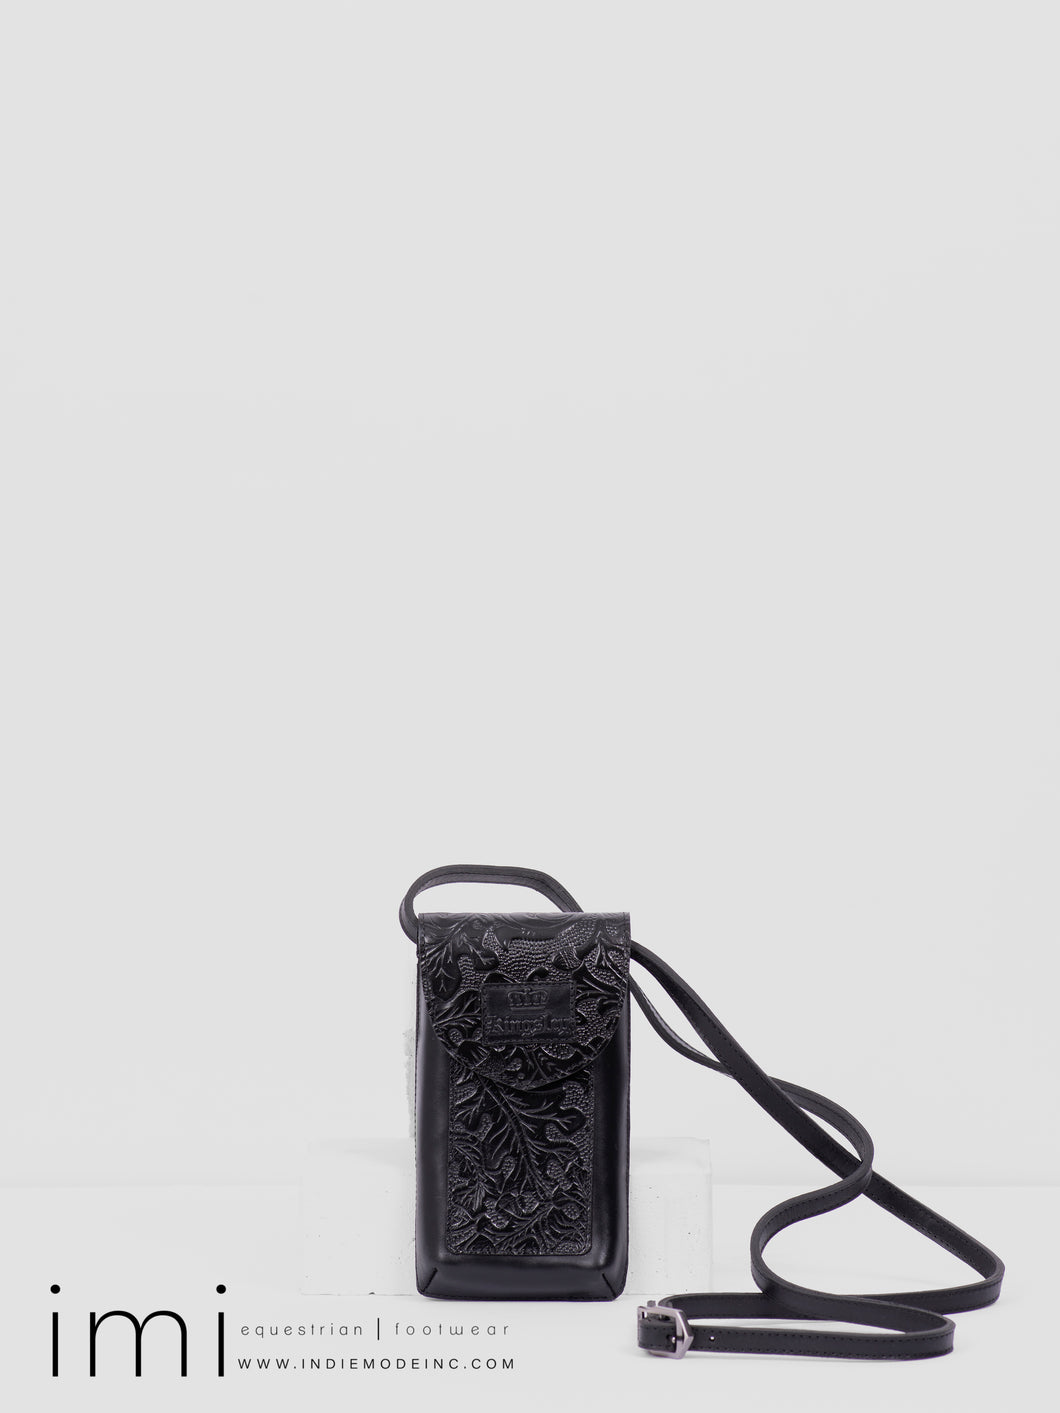 Kingsley Phone Bag 311 Oak Black 293 Natural Black Black Stitching